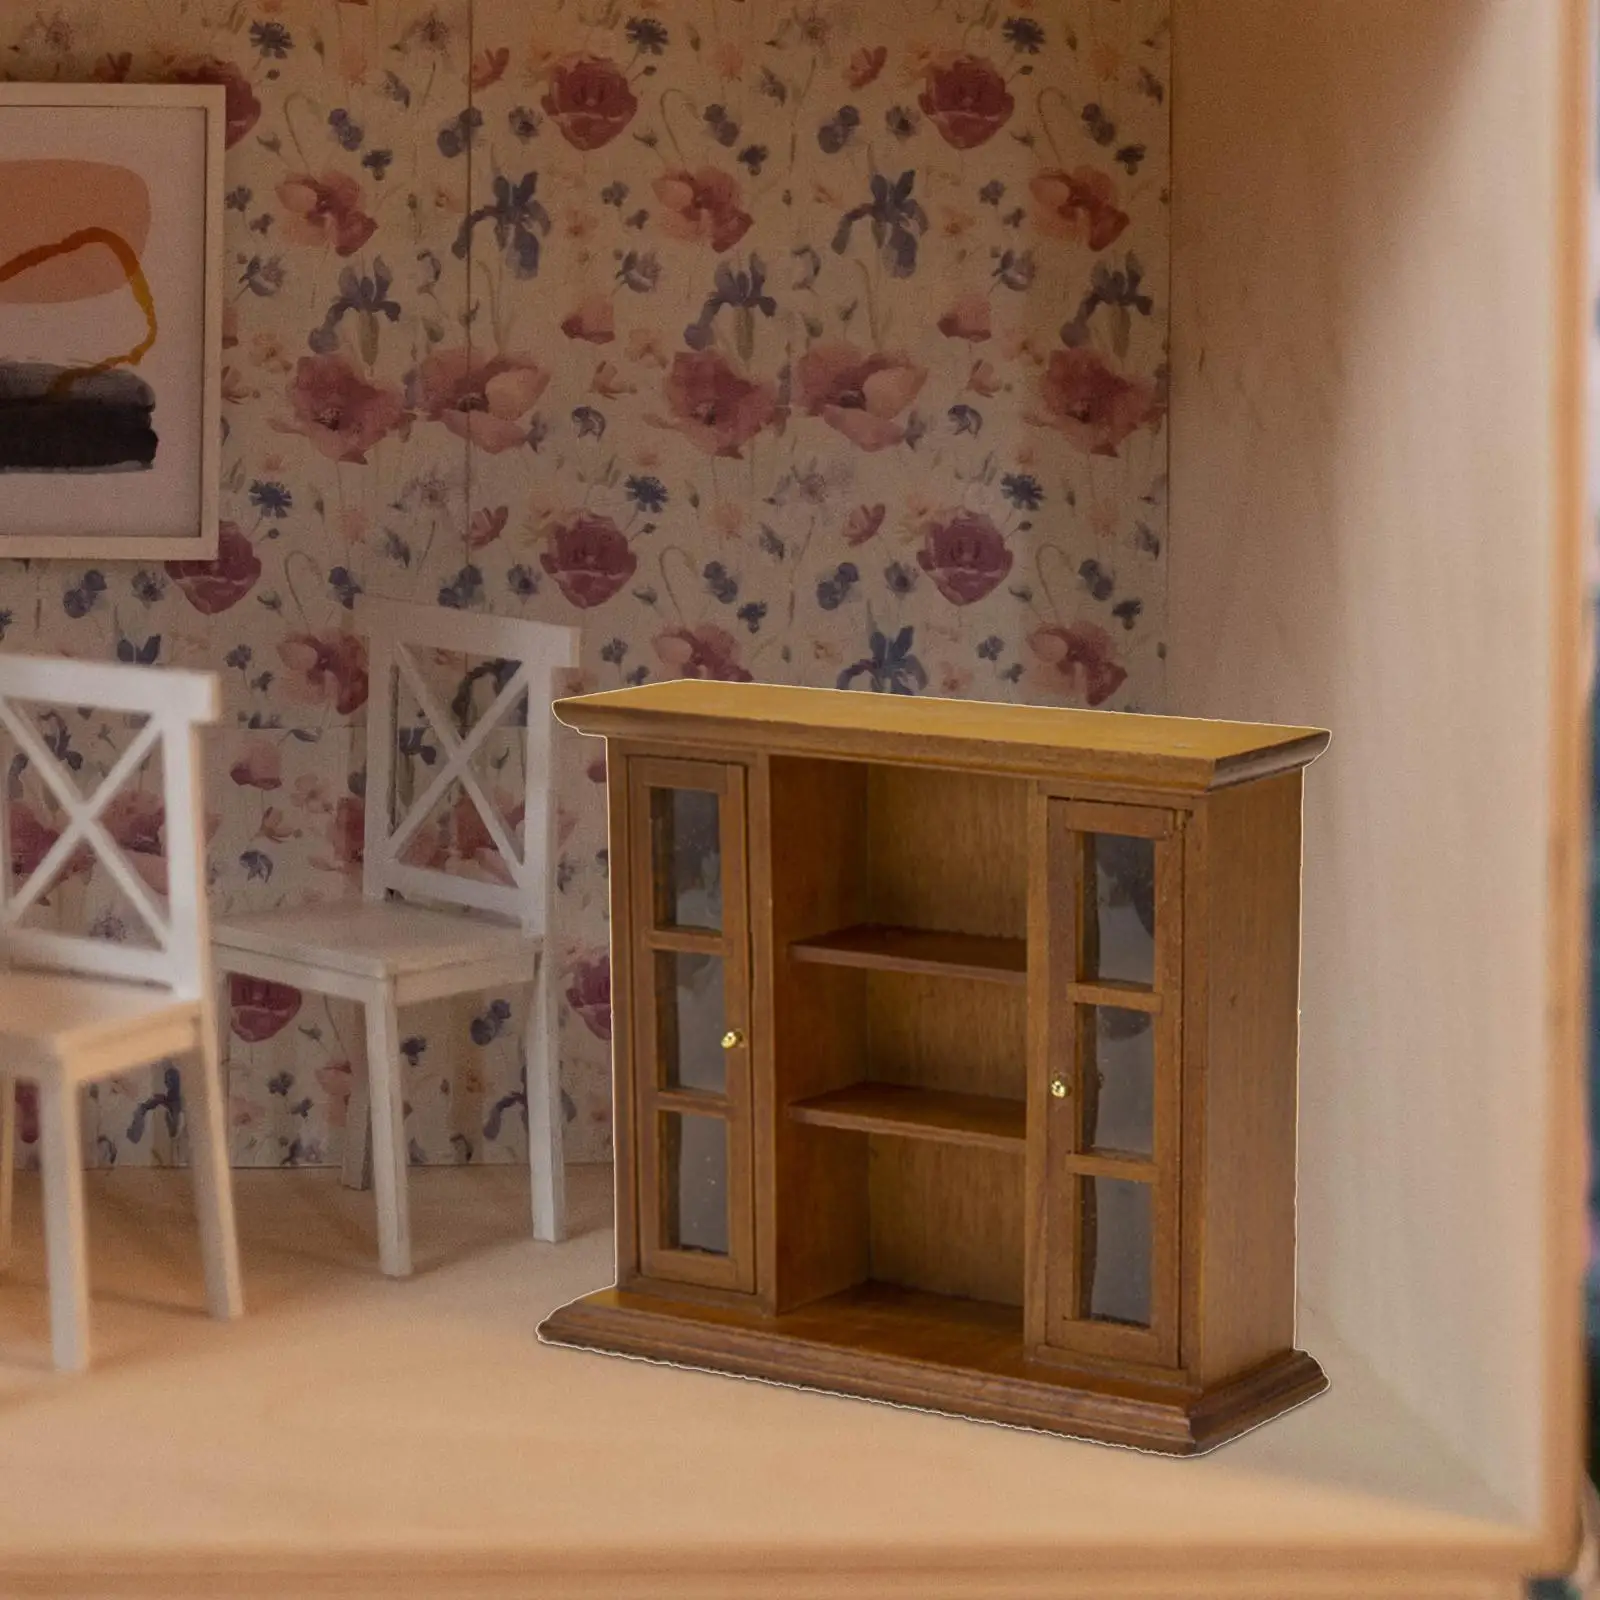 Wooden Dollhouse Shelf Bookshelf Landscape Dollhouse Decoration Accessory Kids Pretend Toys Display Cabinet for Boys Girls